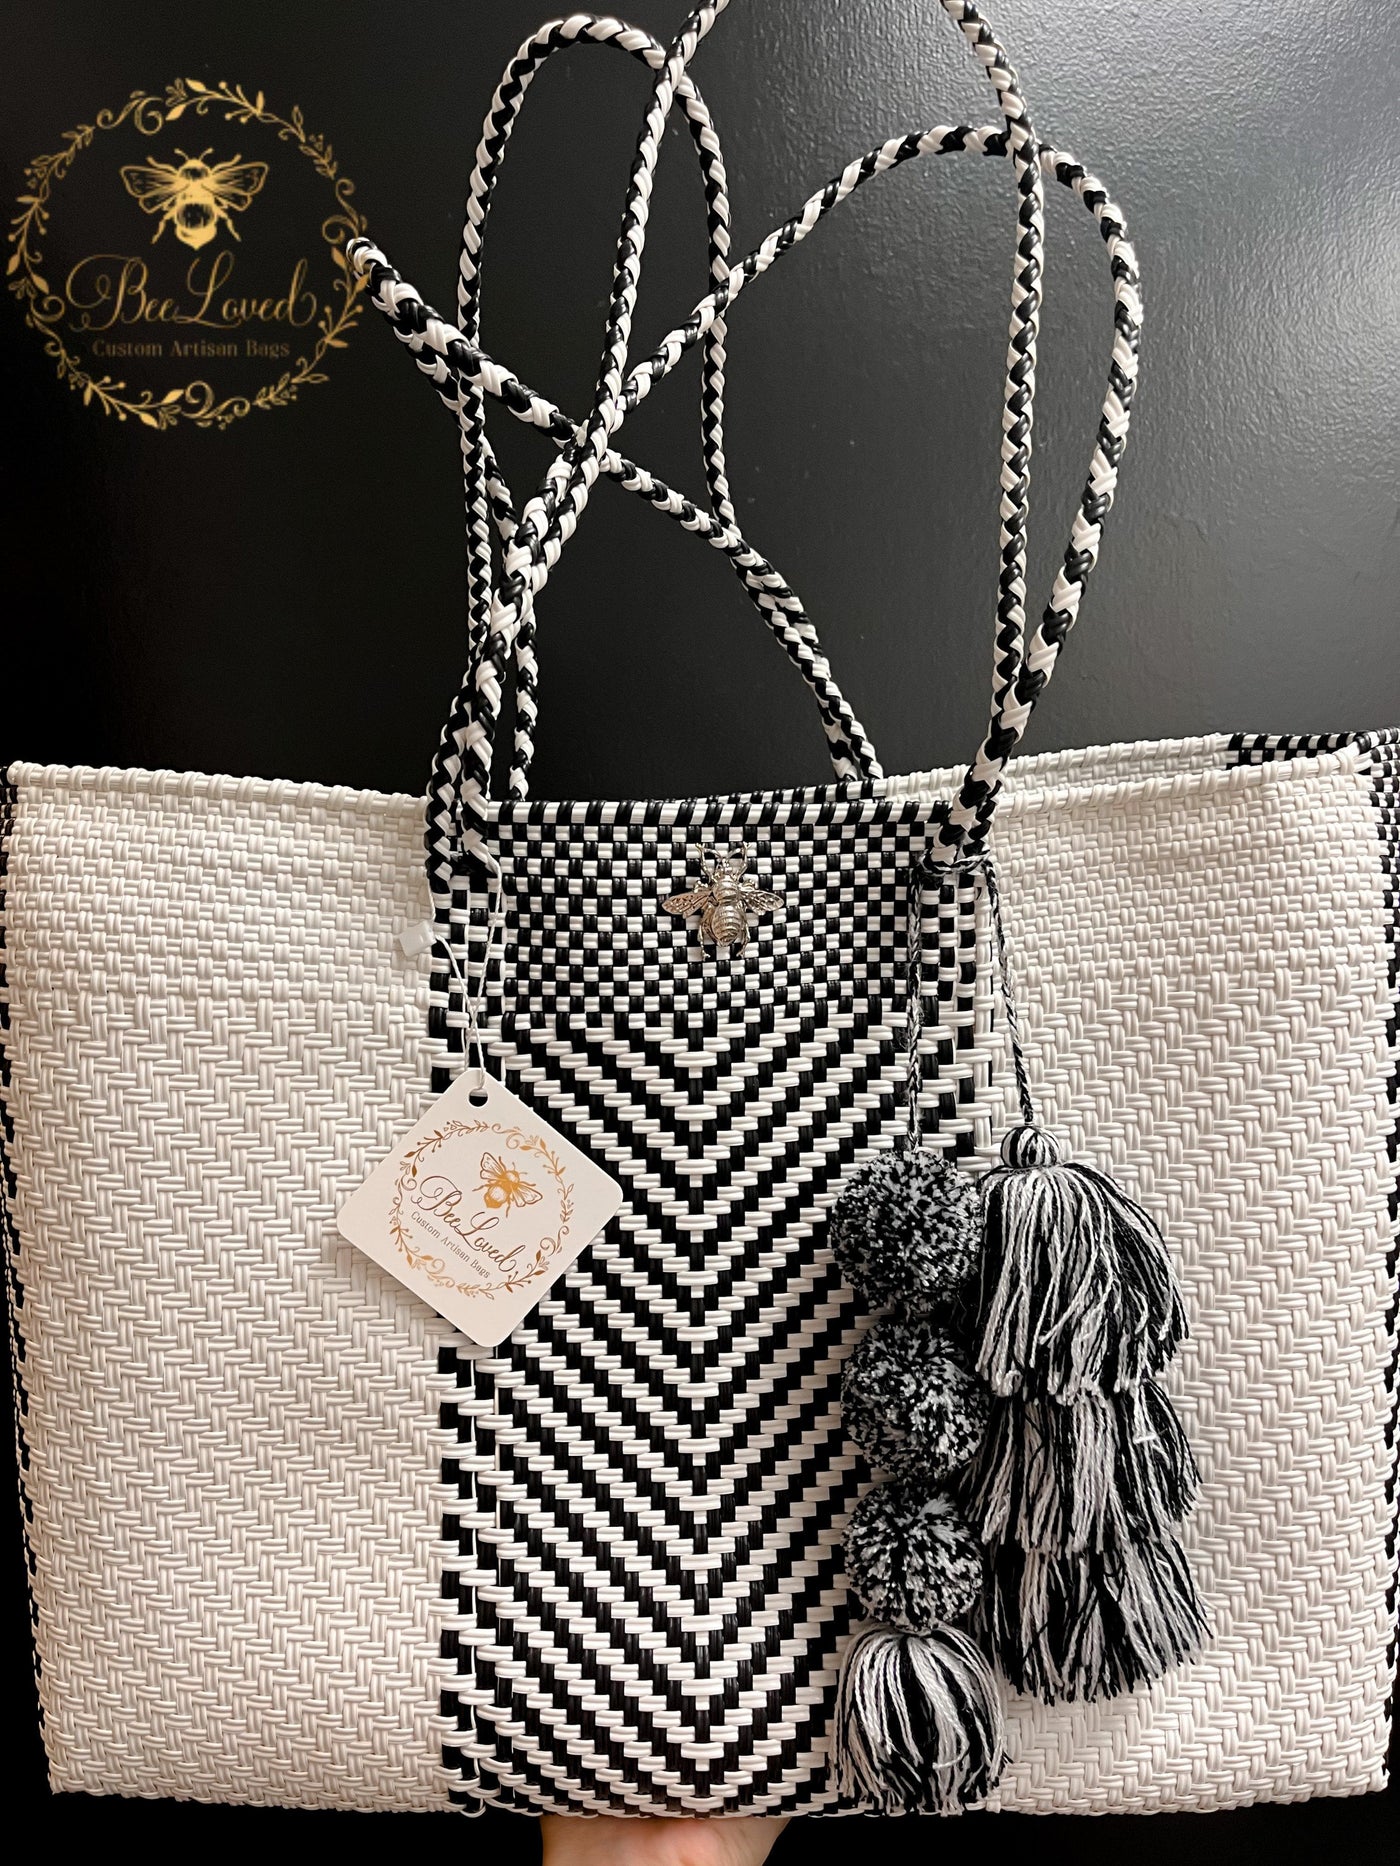 BeeLoved Custom Artisan Bags and Gifts Handbags Medium Oreo Beech Bag